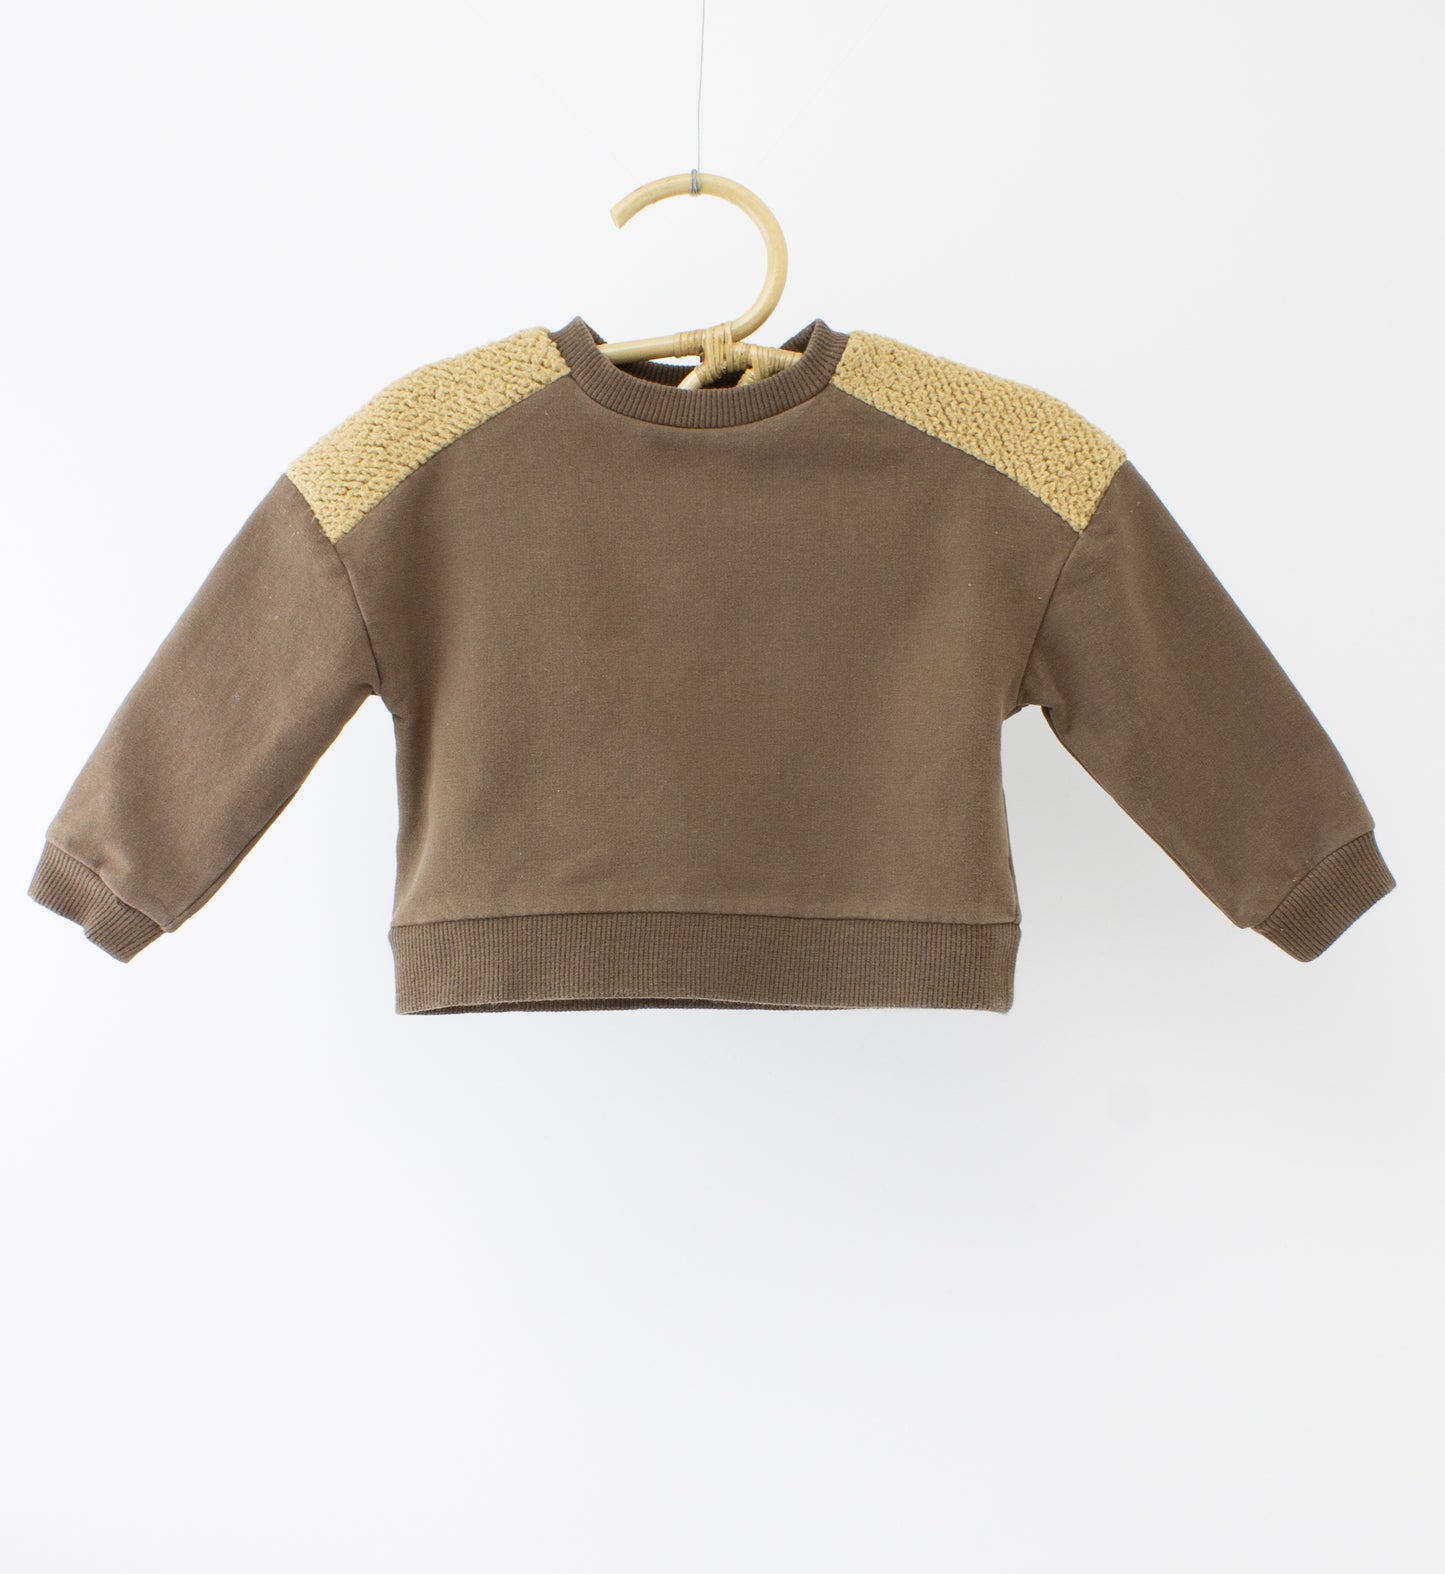 Nixnut - Sweater